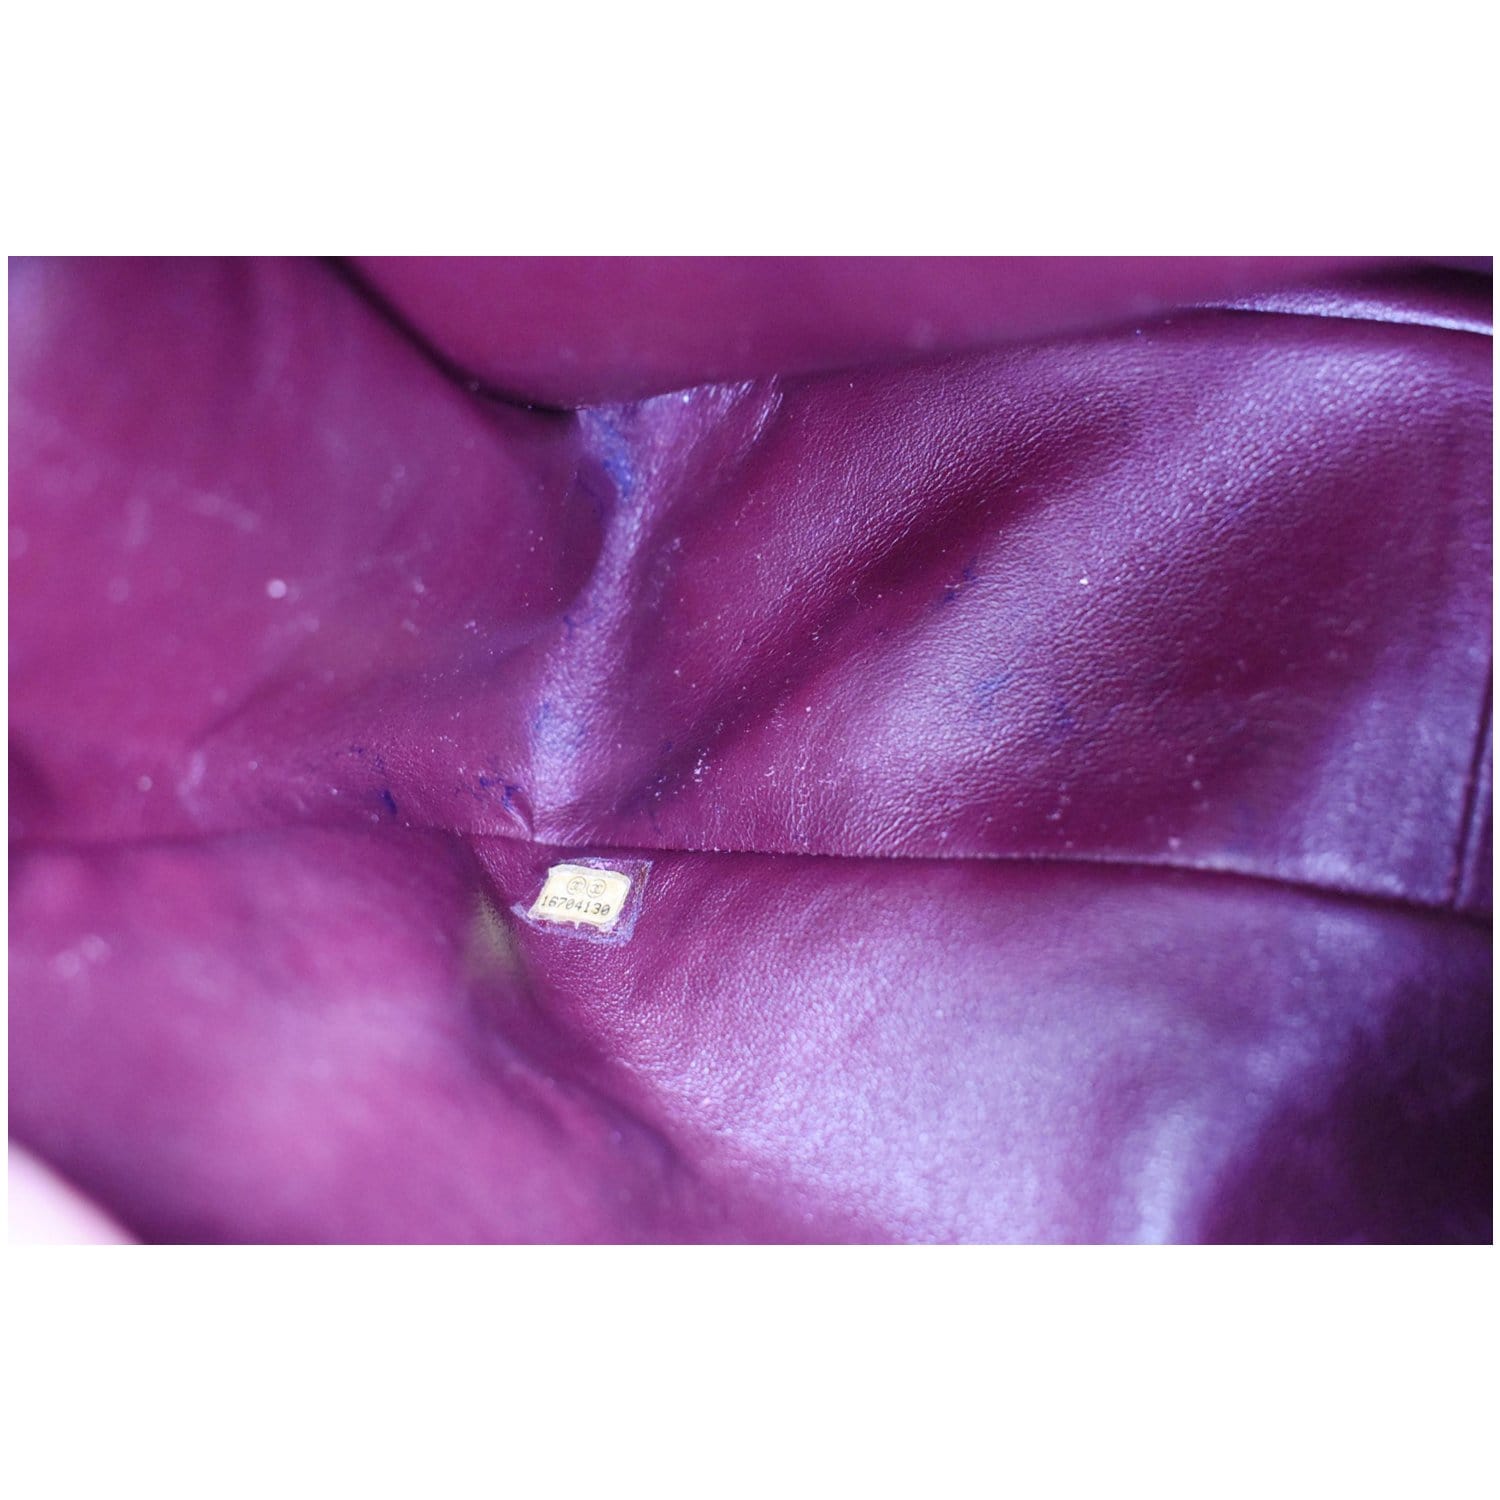 purple chanel purse caviar